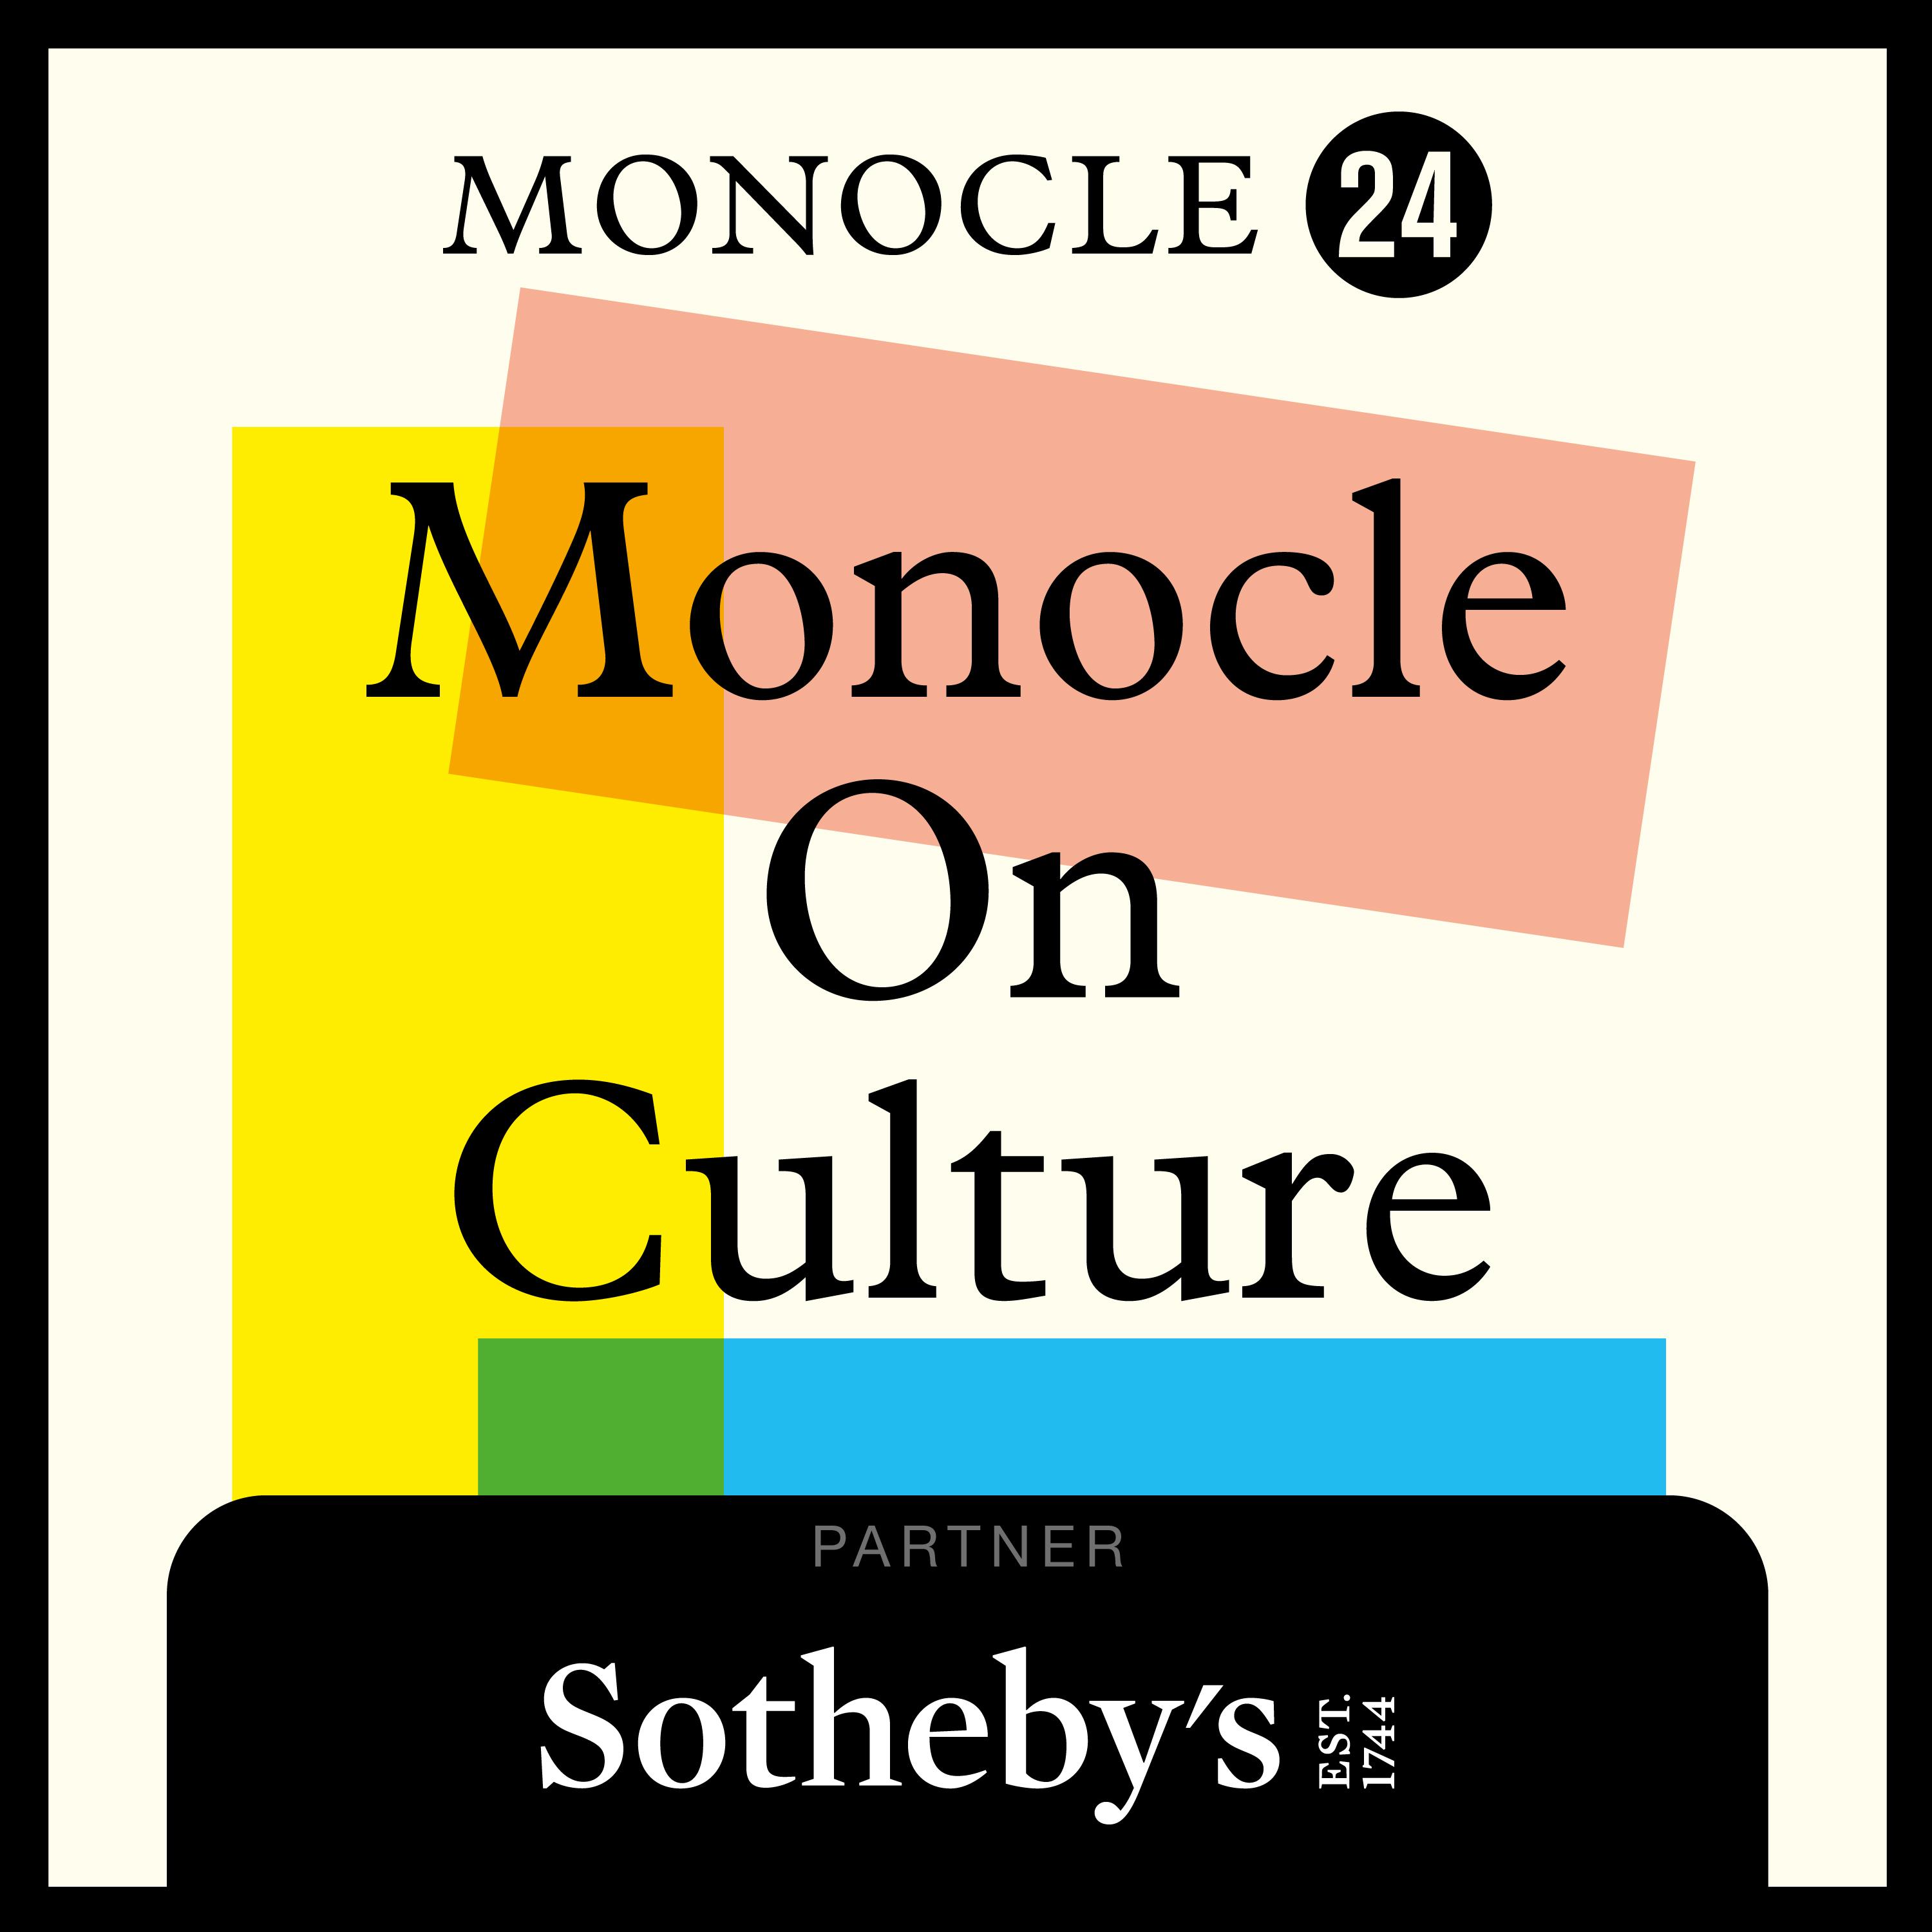 Monocle 24: Monocle on Culture